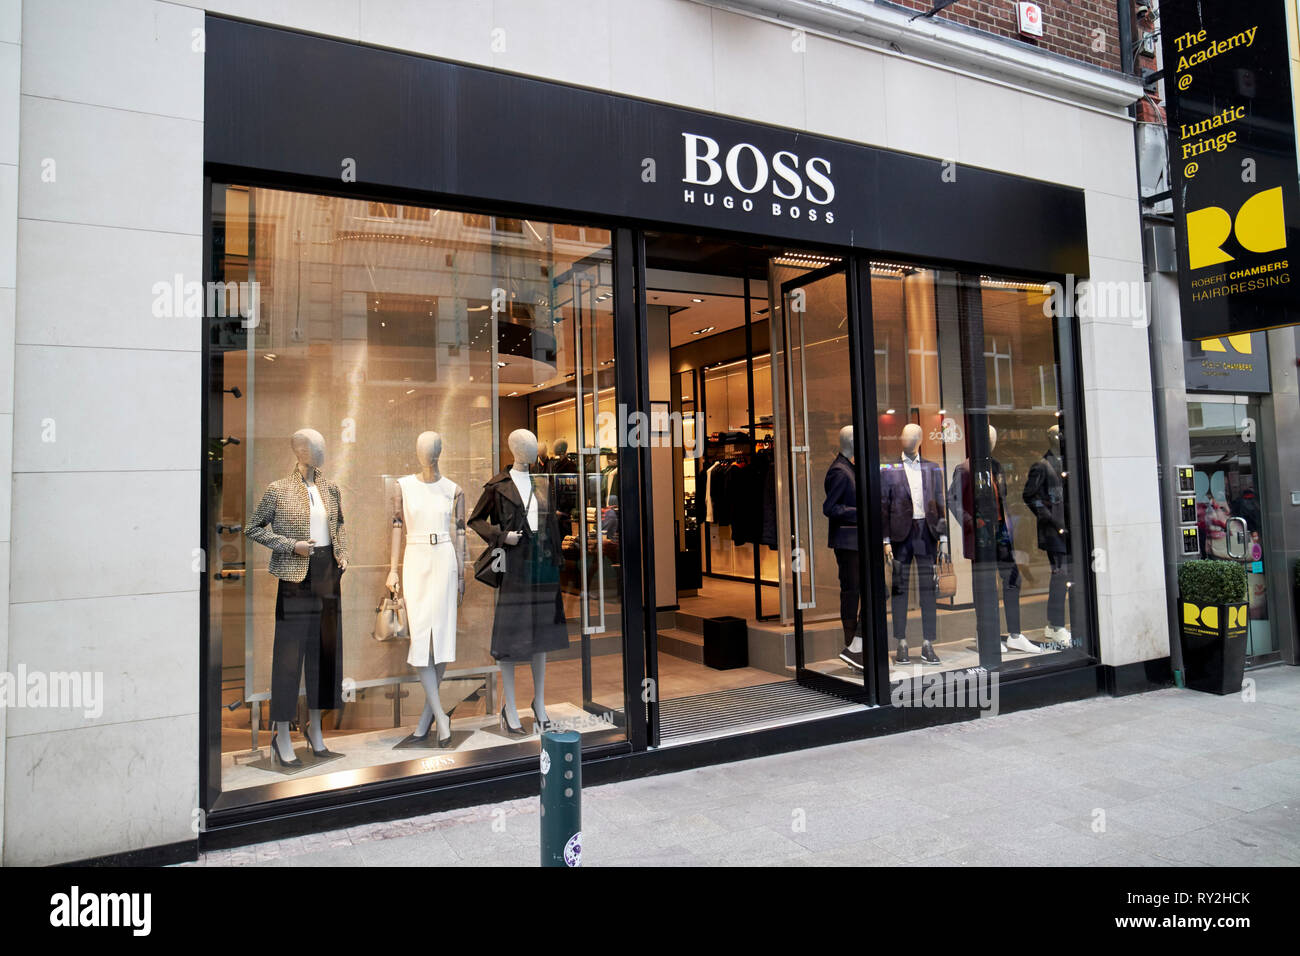 Boss By Hugo Boss Banque d'image et photos - Alamy